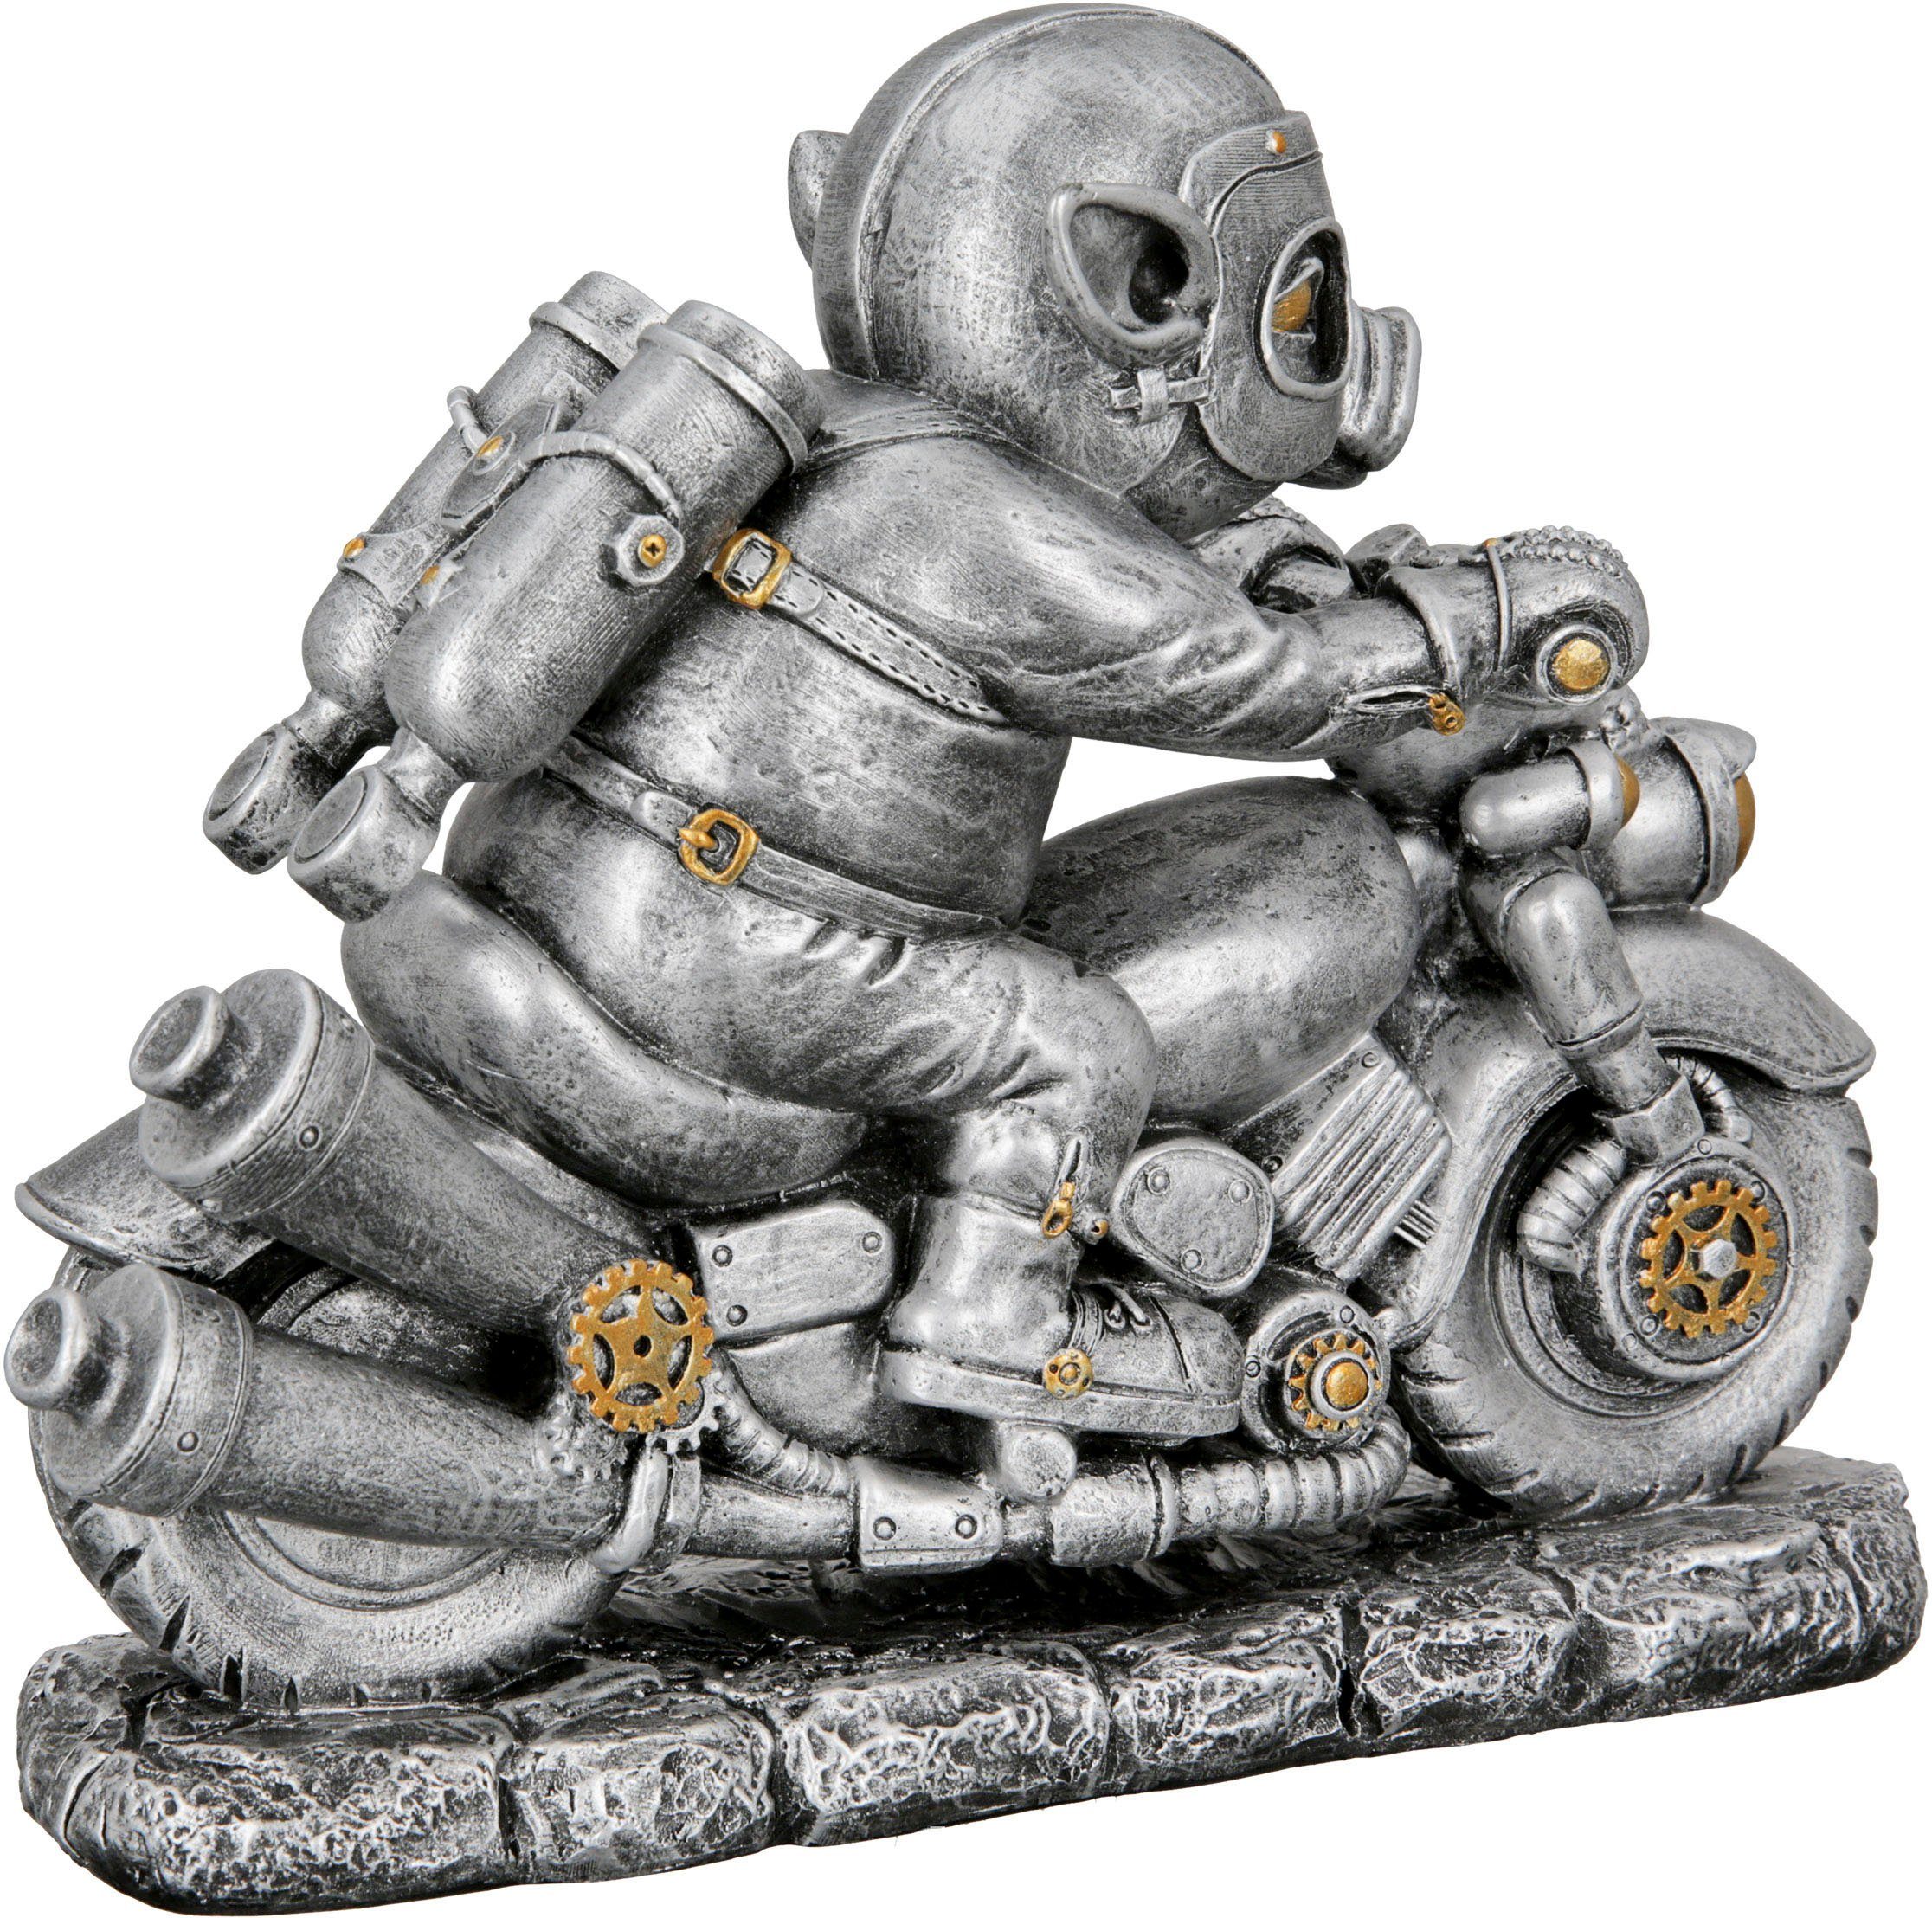 Casablanca Tierfigur Skulptur (1 Motor-Pig Steampunk Gilde St) by